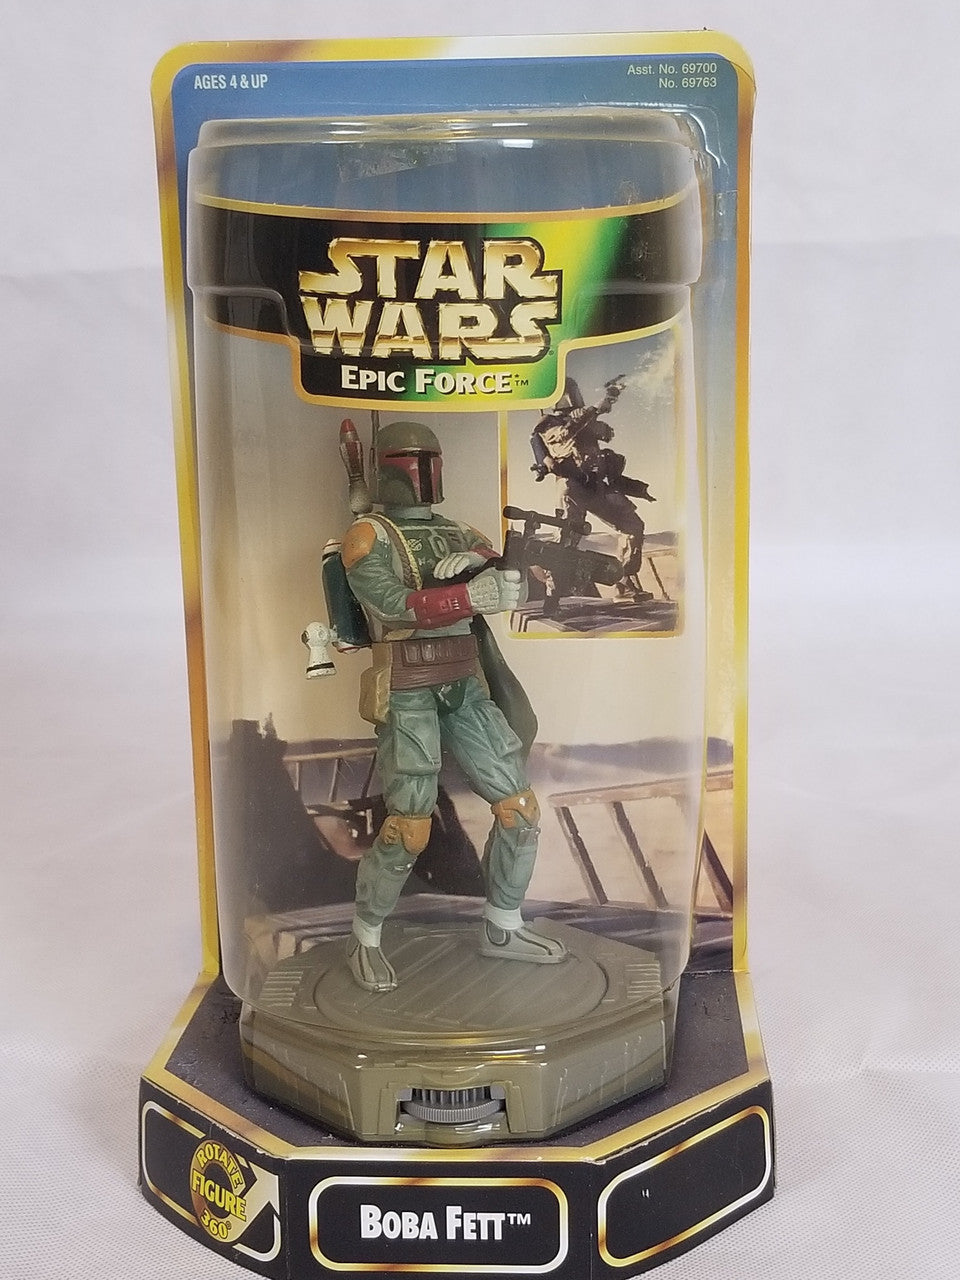 1997 Star Wars Epic Force Boba Fett Figure